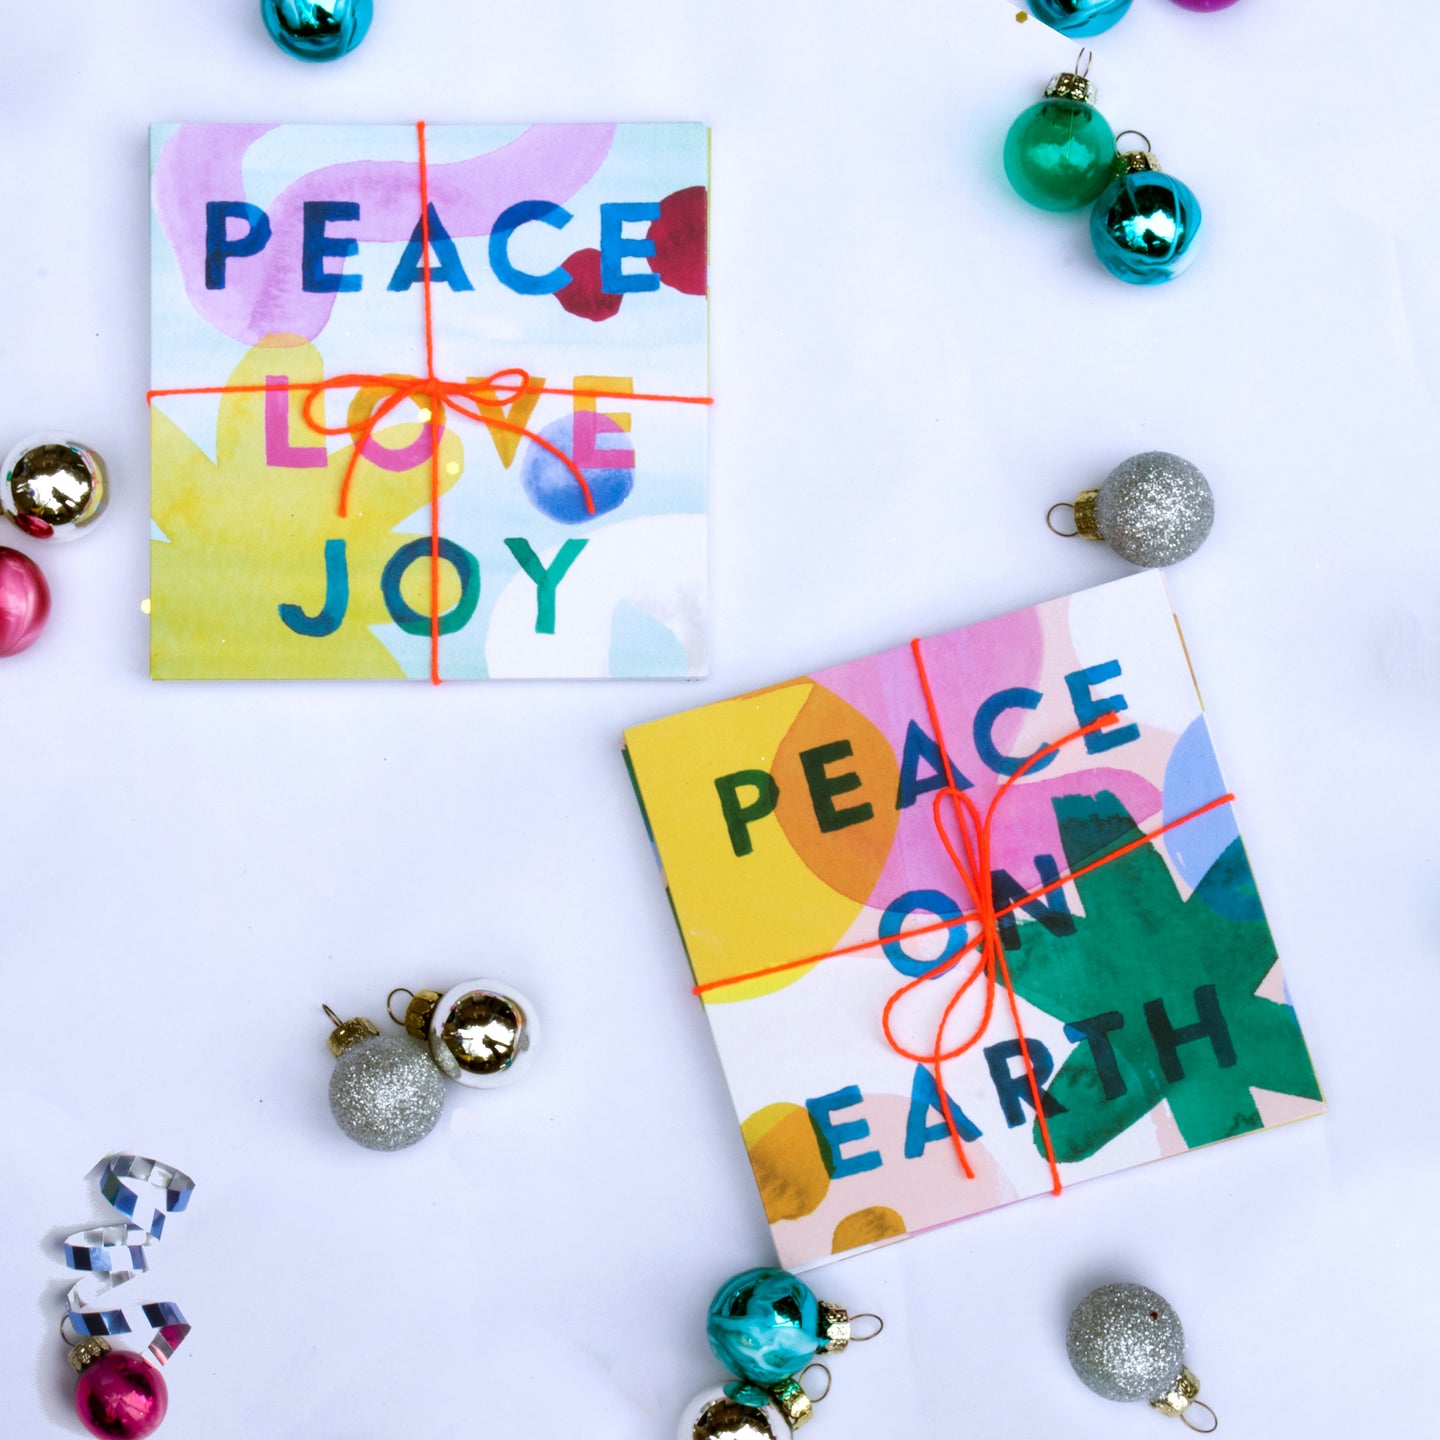 Artist print Holiday card set, colorful artist holiday card set, Peace on earth Holiday Card set, Peace love joy holiday card set, folded holiday card set